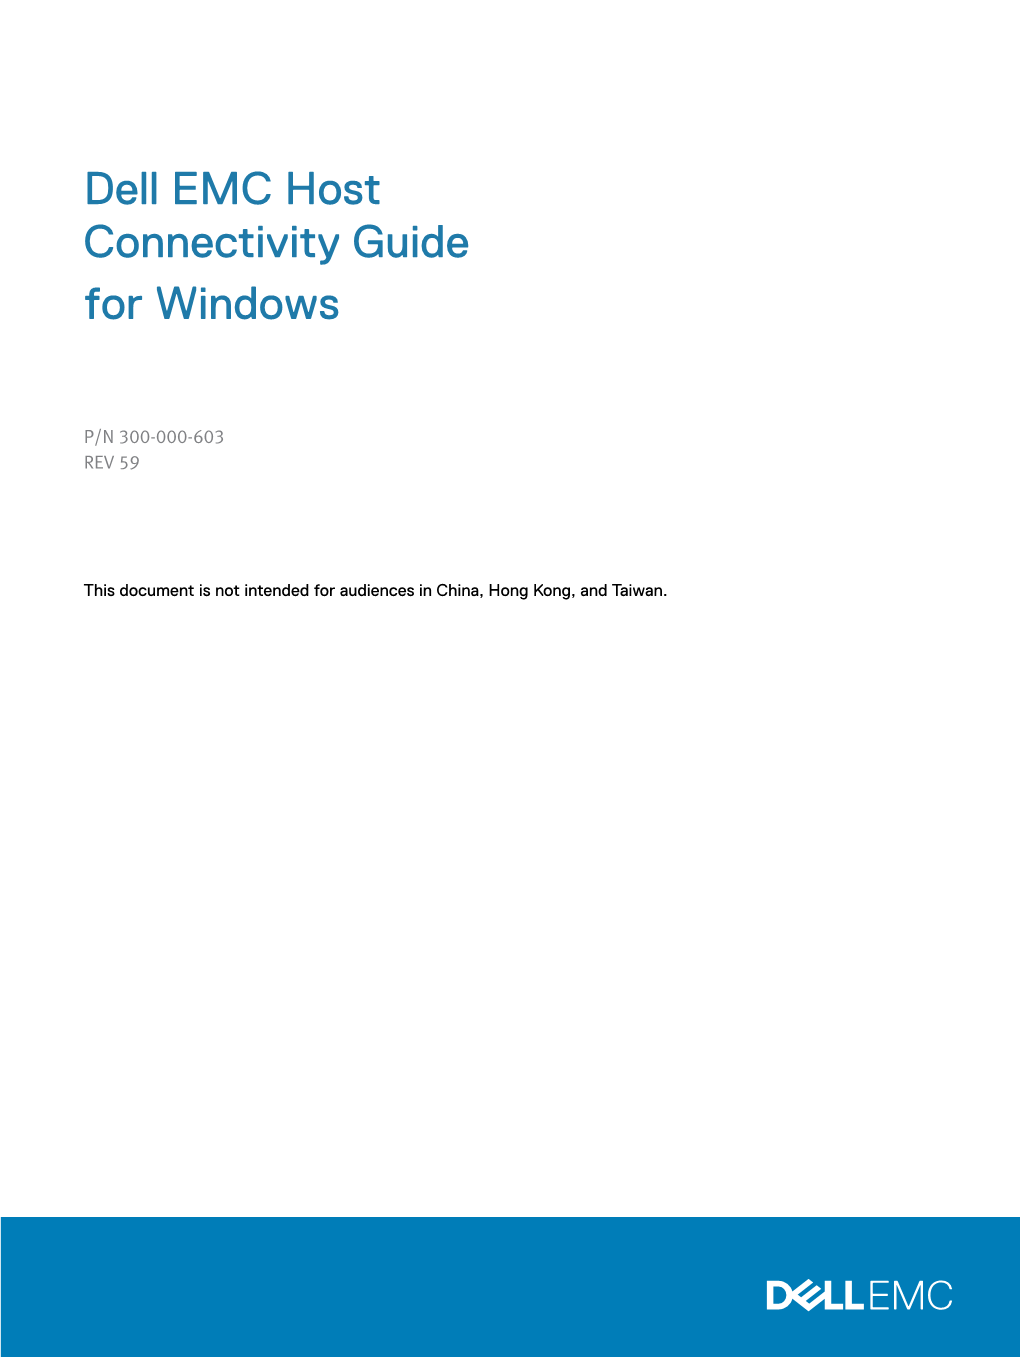 Dell EMC Host Connectivity Guide for Windows